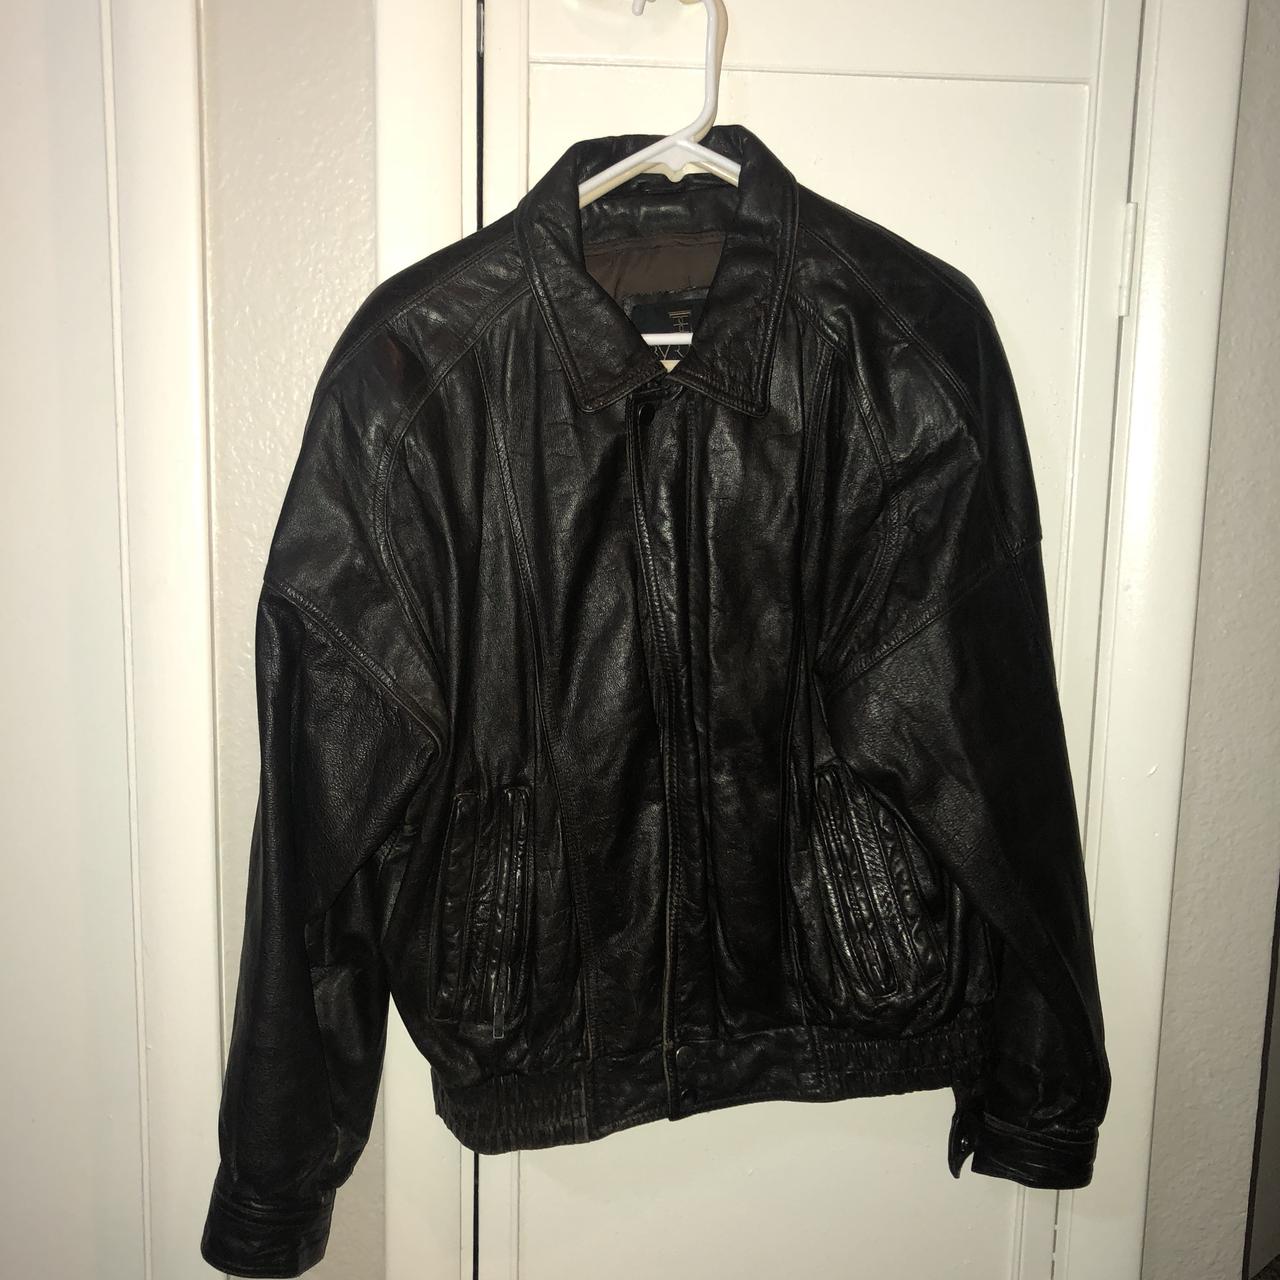 Vintage Leather Jacket, fits like a L-XL - Depop